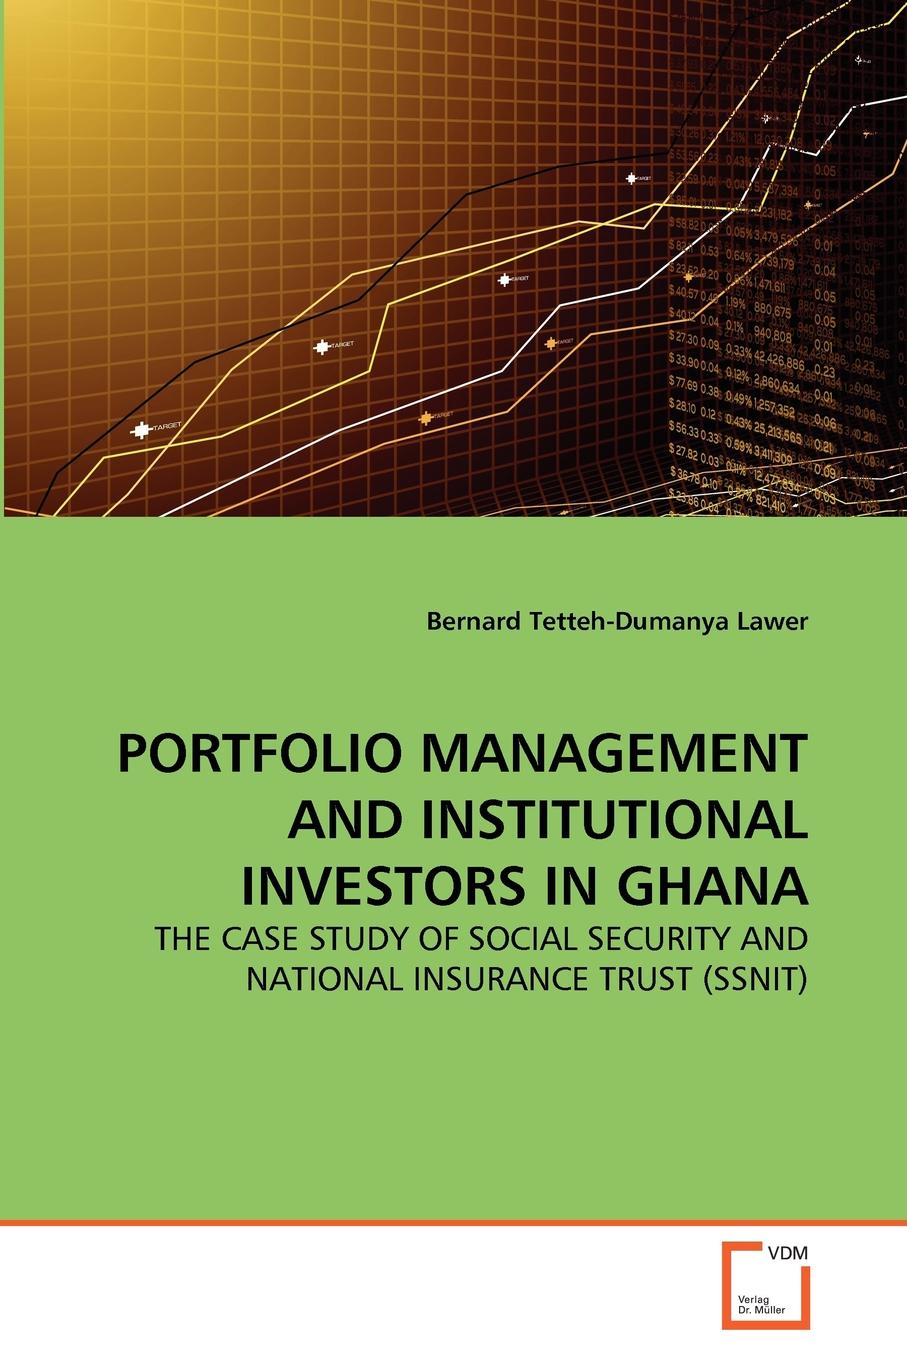 PORTFOLIO MANAGEMENT AND INSTITUTIONAL INVESTORS IN GHANA